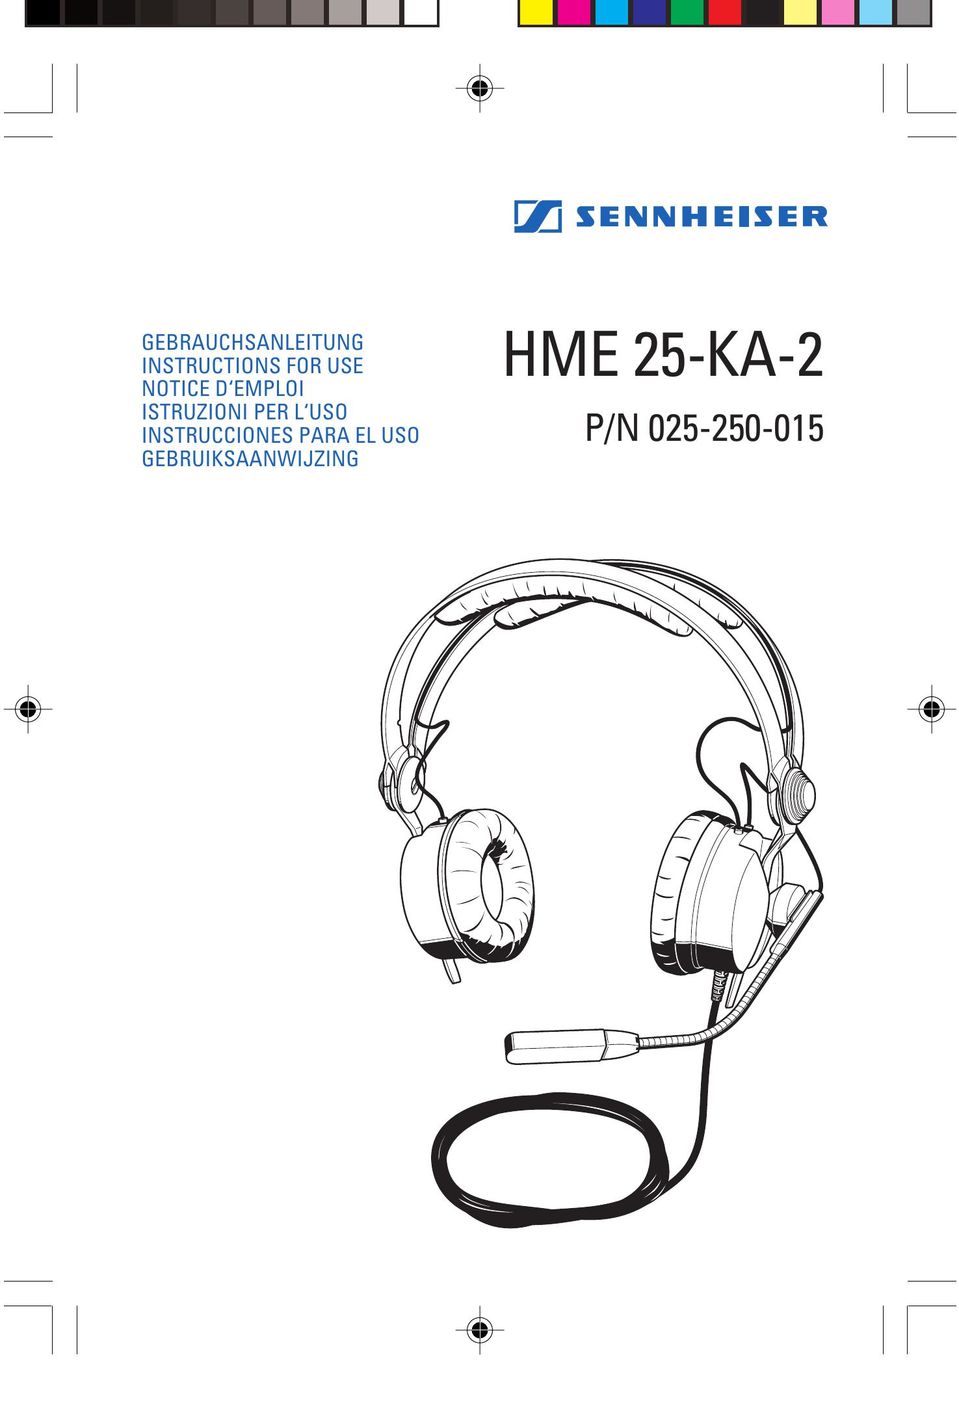 Sennheiser HME 25-KA-2 Network Card User Manual